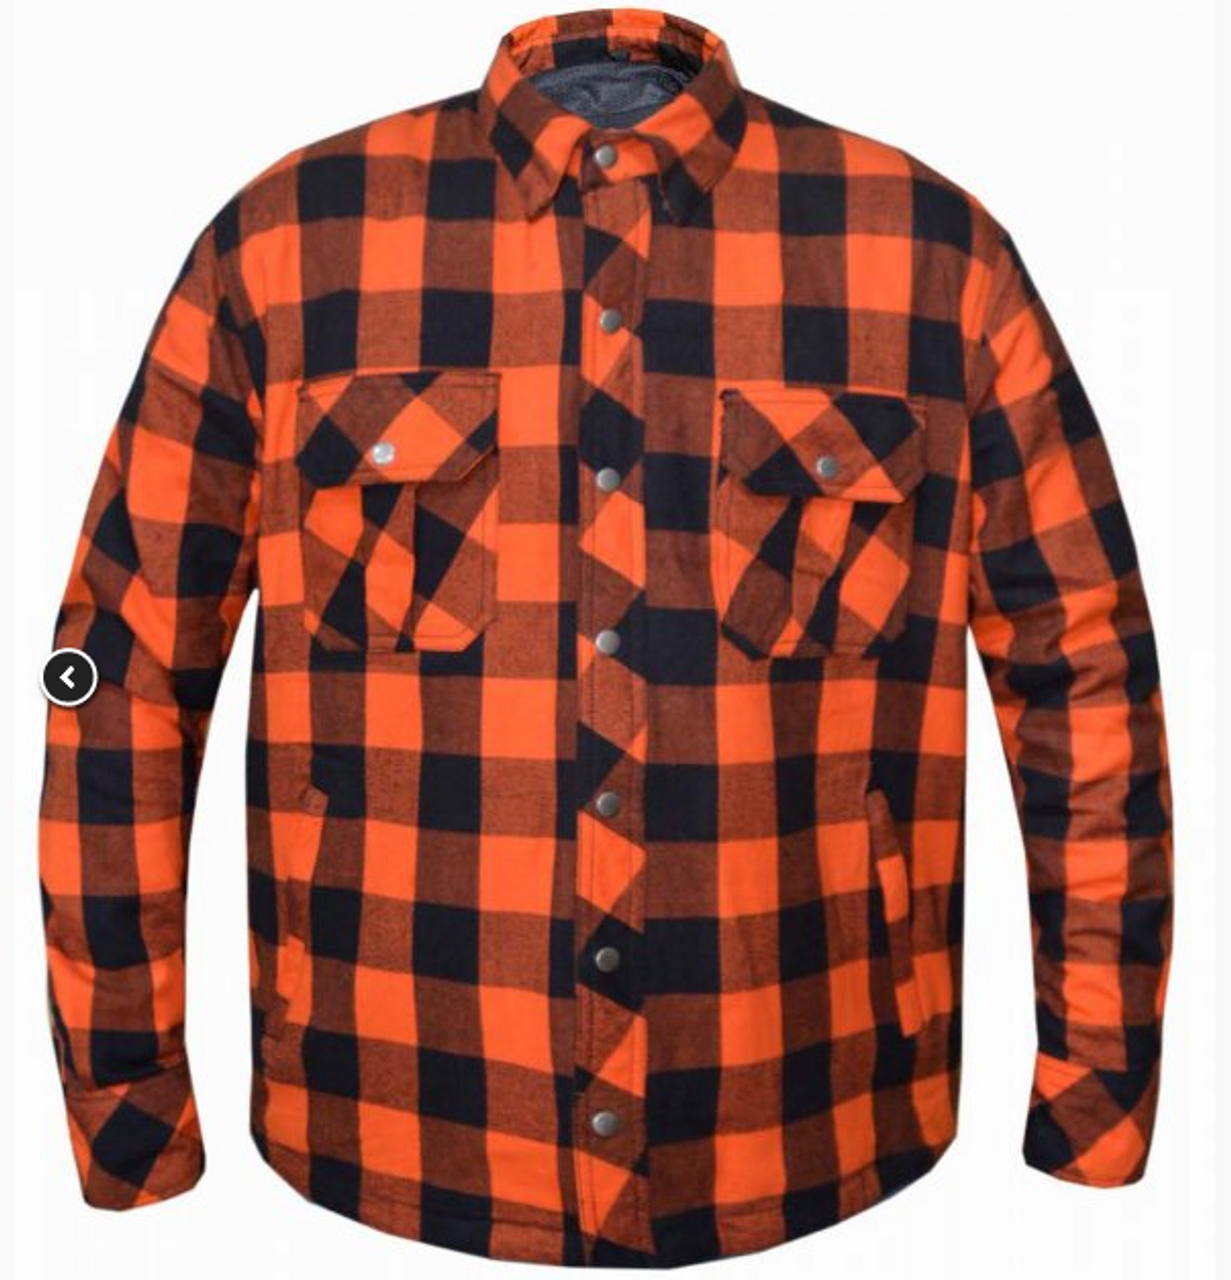 Big Plaid Heavyweight Flannel Shirt - Orange/Black